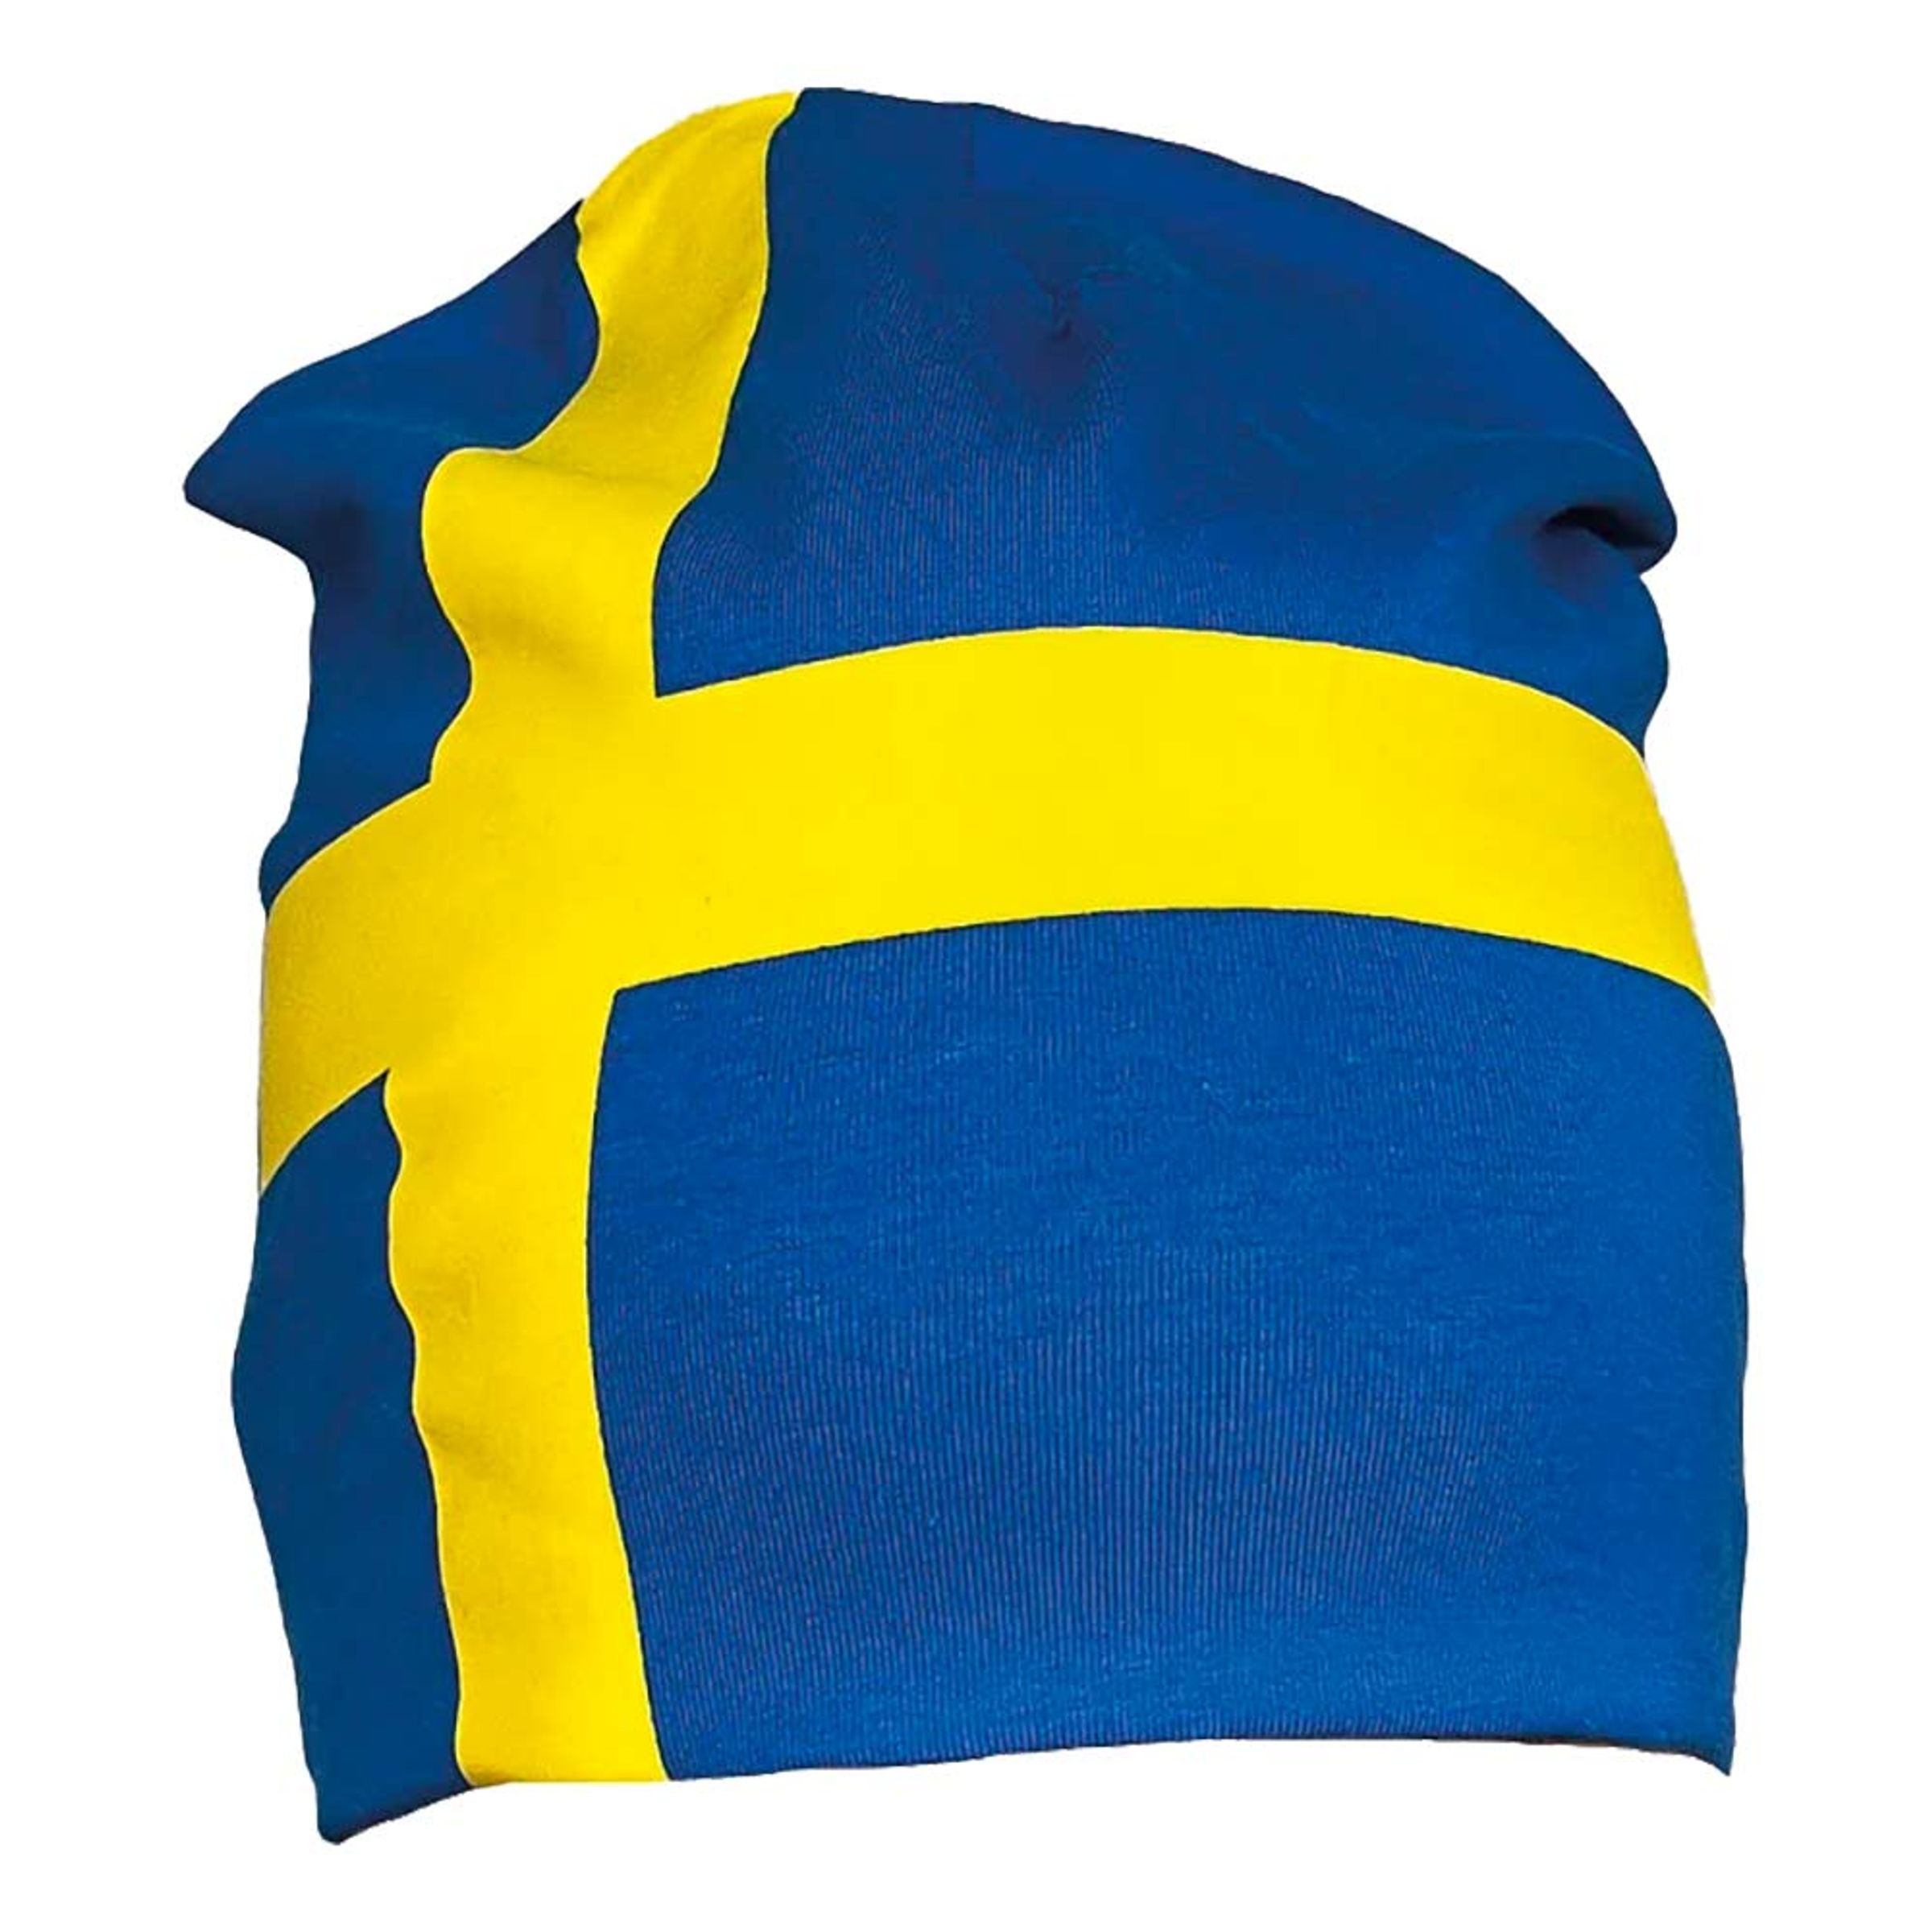 Sverigemössa - One size